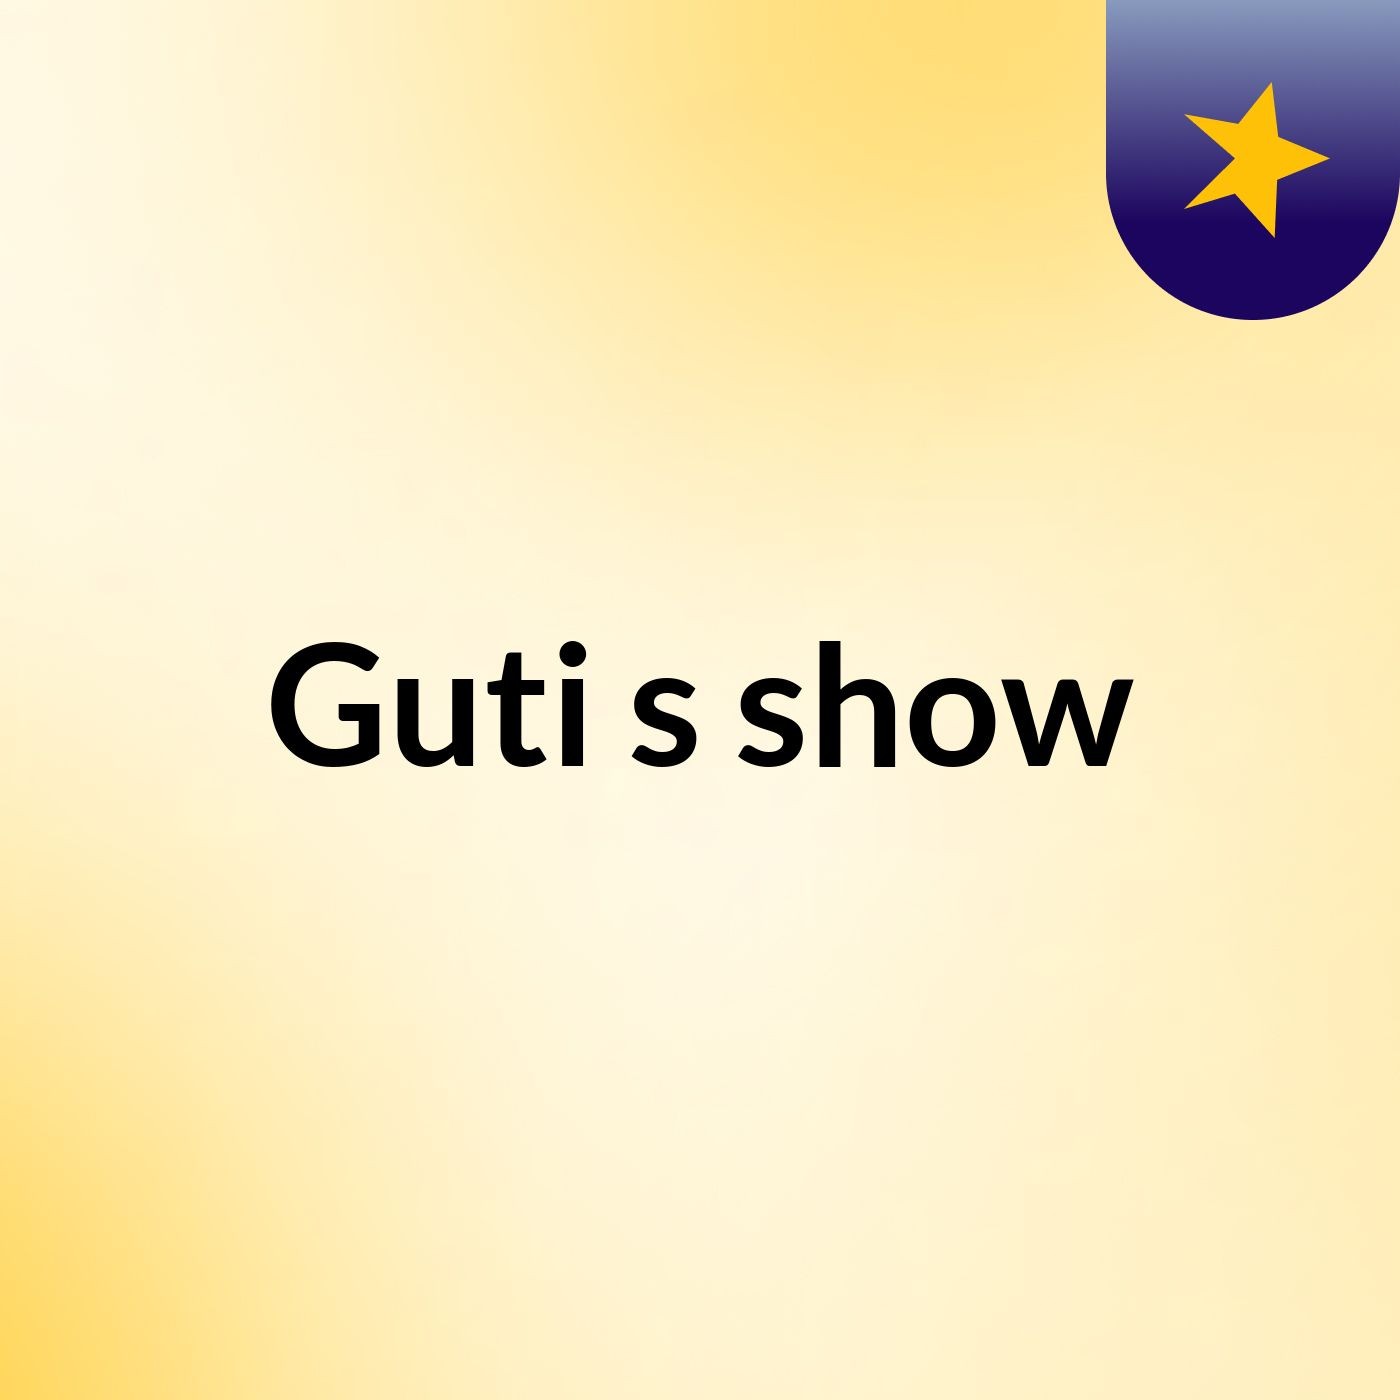 Guti's show